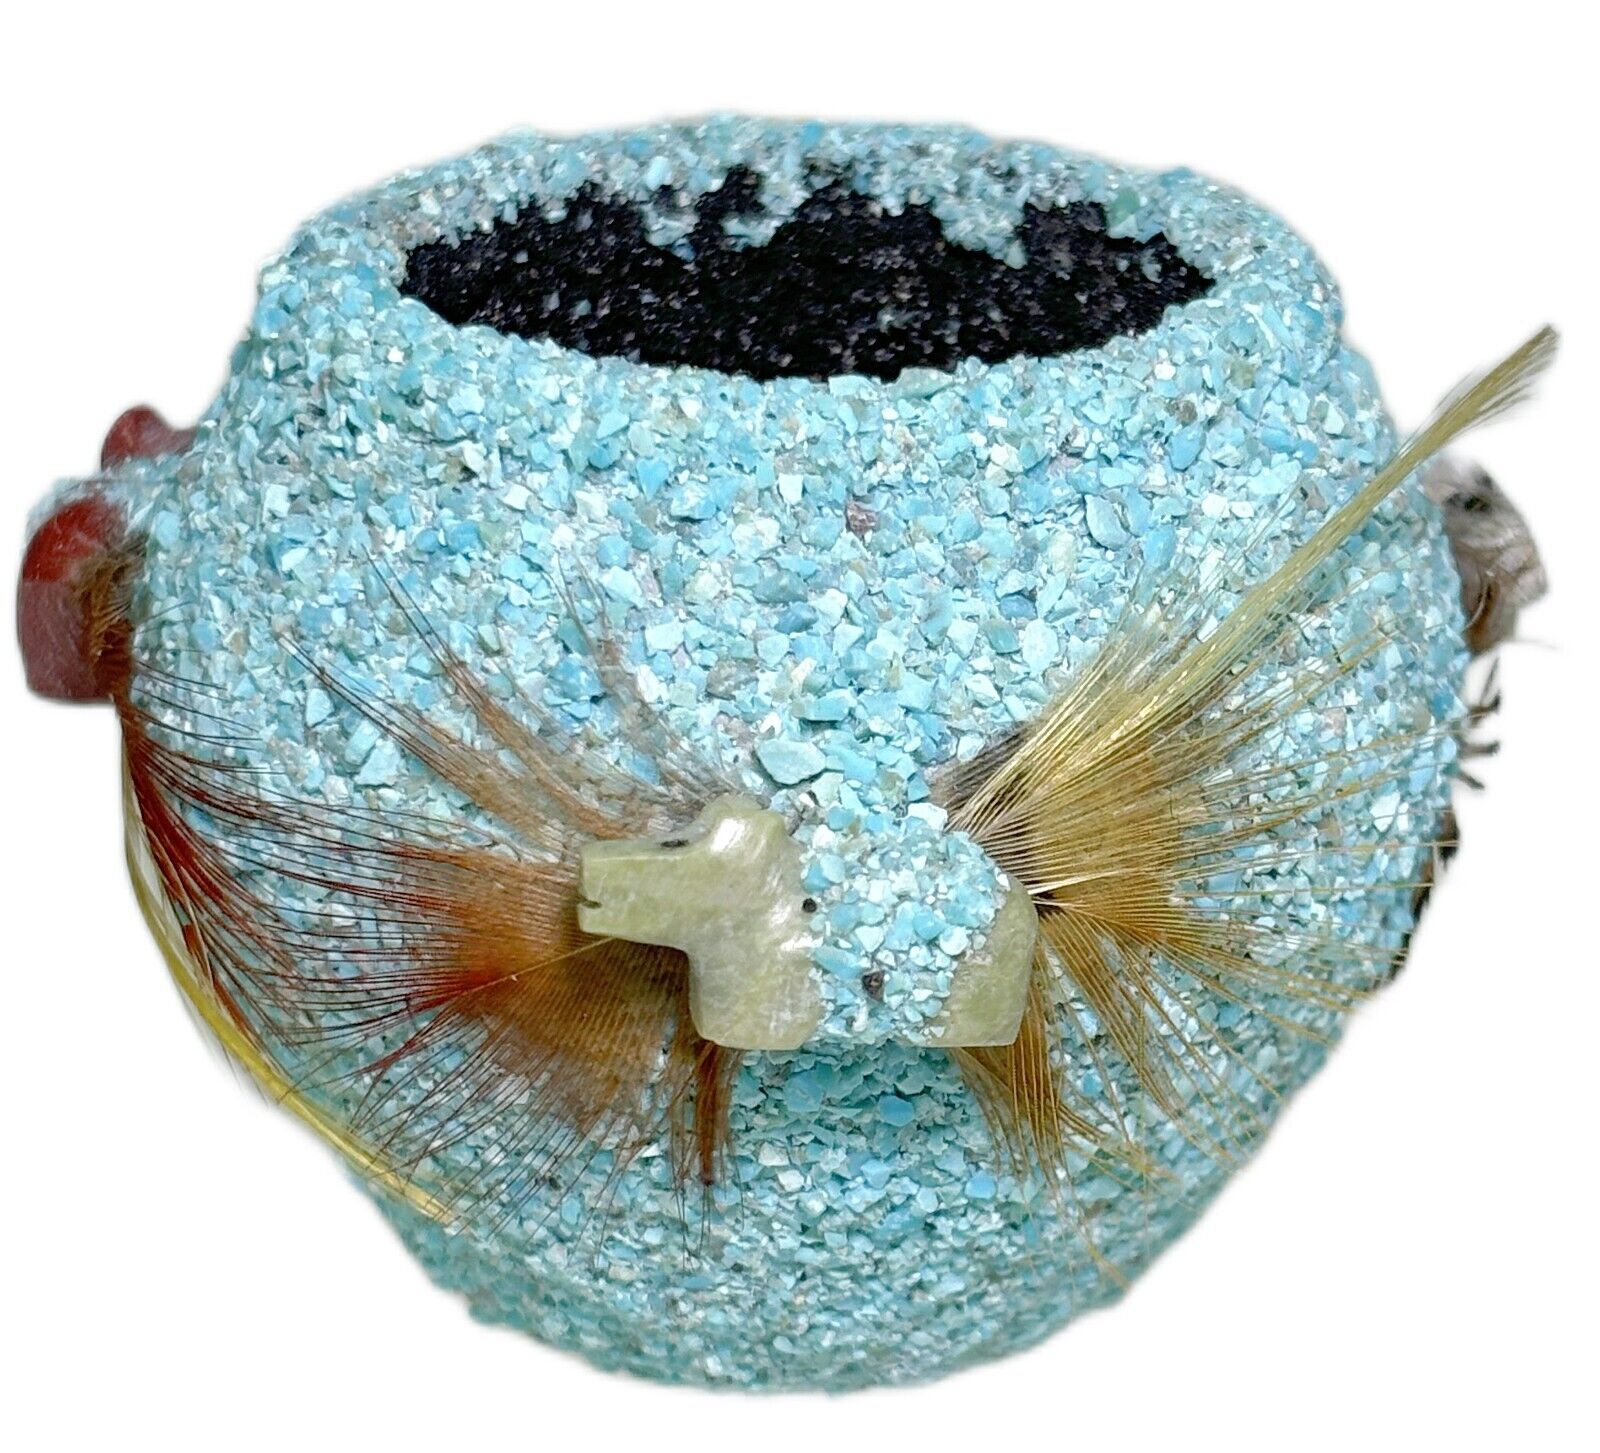 Mini Native Zuni Indian Tribal Pot Crushed Turquoise Pottery Bowl H1.75” x 2.25